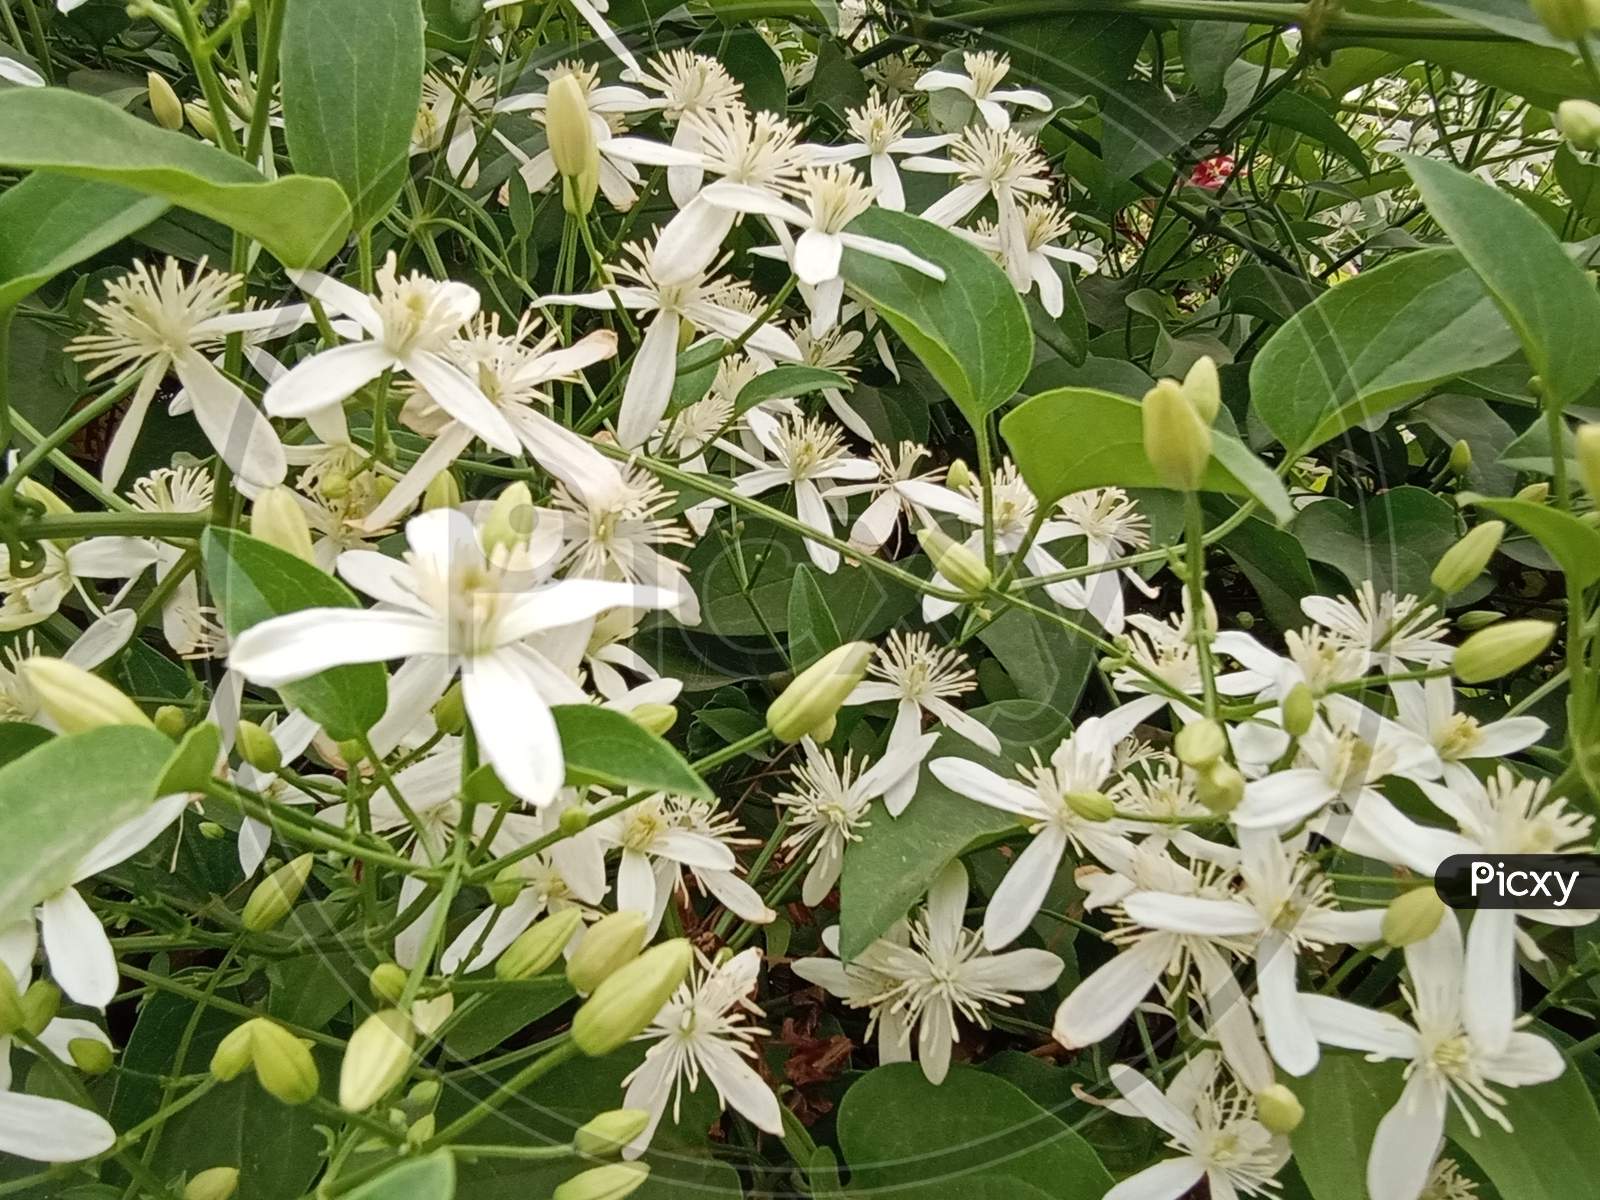 Night blooming jasmine